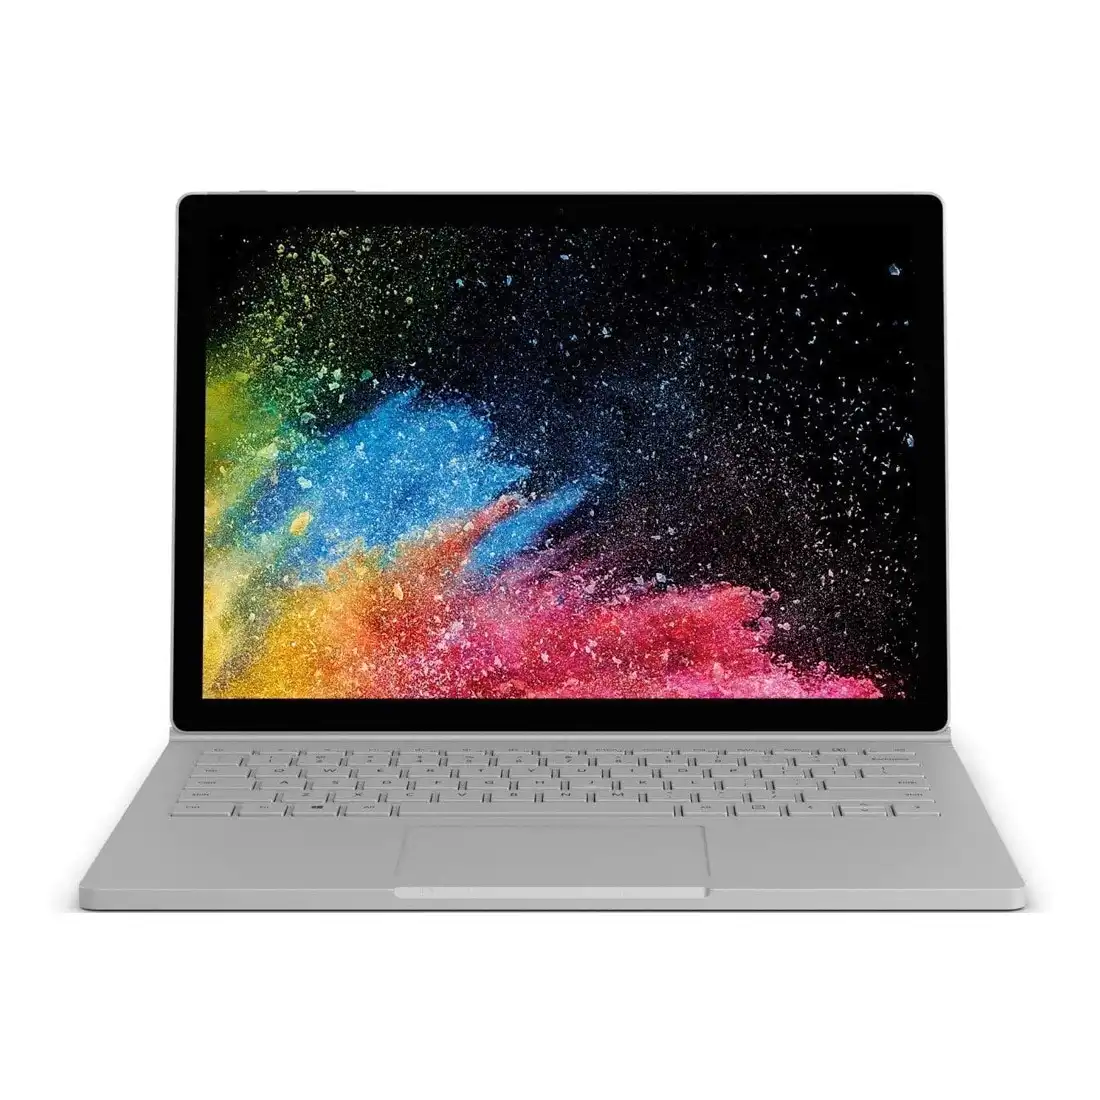 Microsoft Surface Book 2 (13", i5-7300U, 128GB/4GB, JHY-00013) Platinum [Refurbished] - Excellent